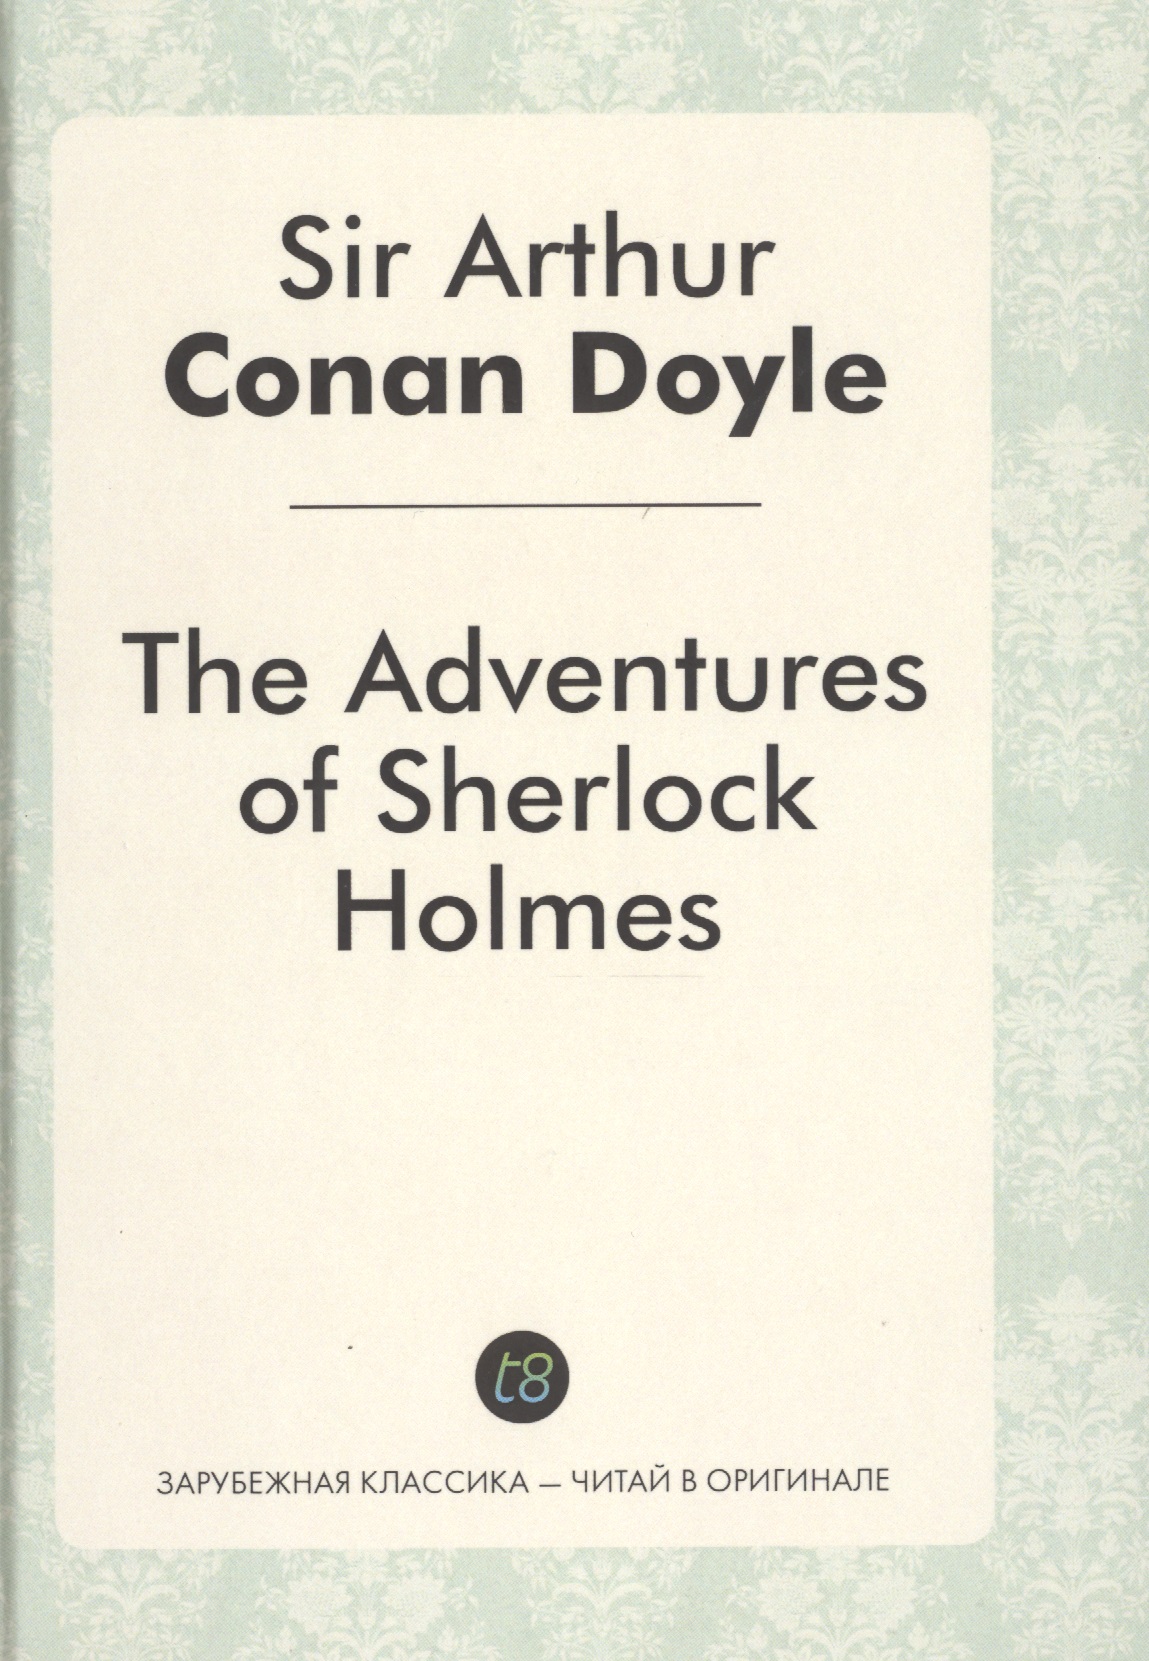 дойл артур конан the adventures of sherlock holmes v приключения шерлока холмса v на англ яз Дойл Артур Конан The Adventures of Sherlock Holmes = Приключения Шерлока Холмса: рассказы на англ.яз